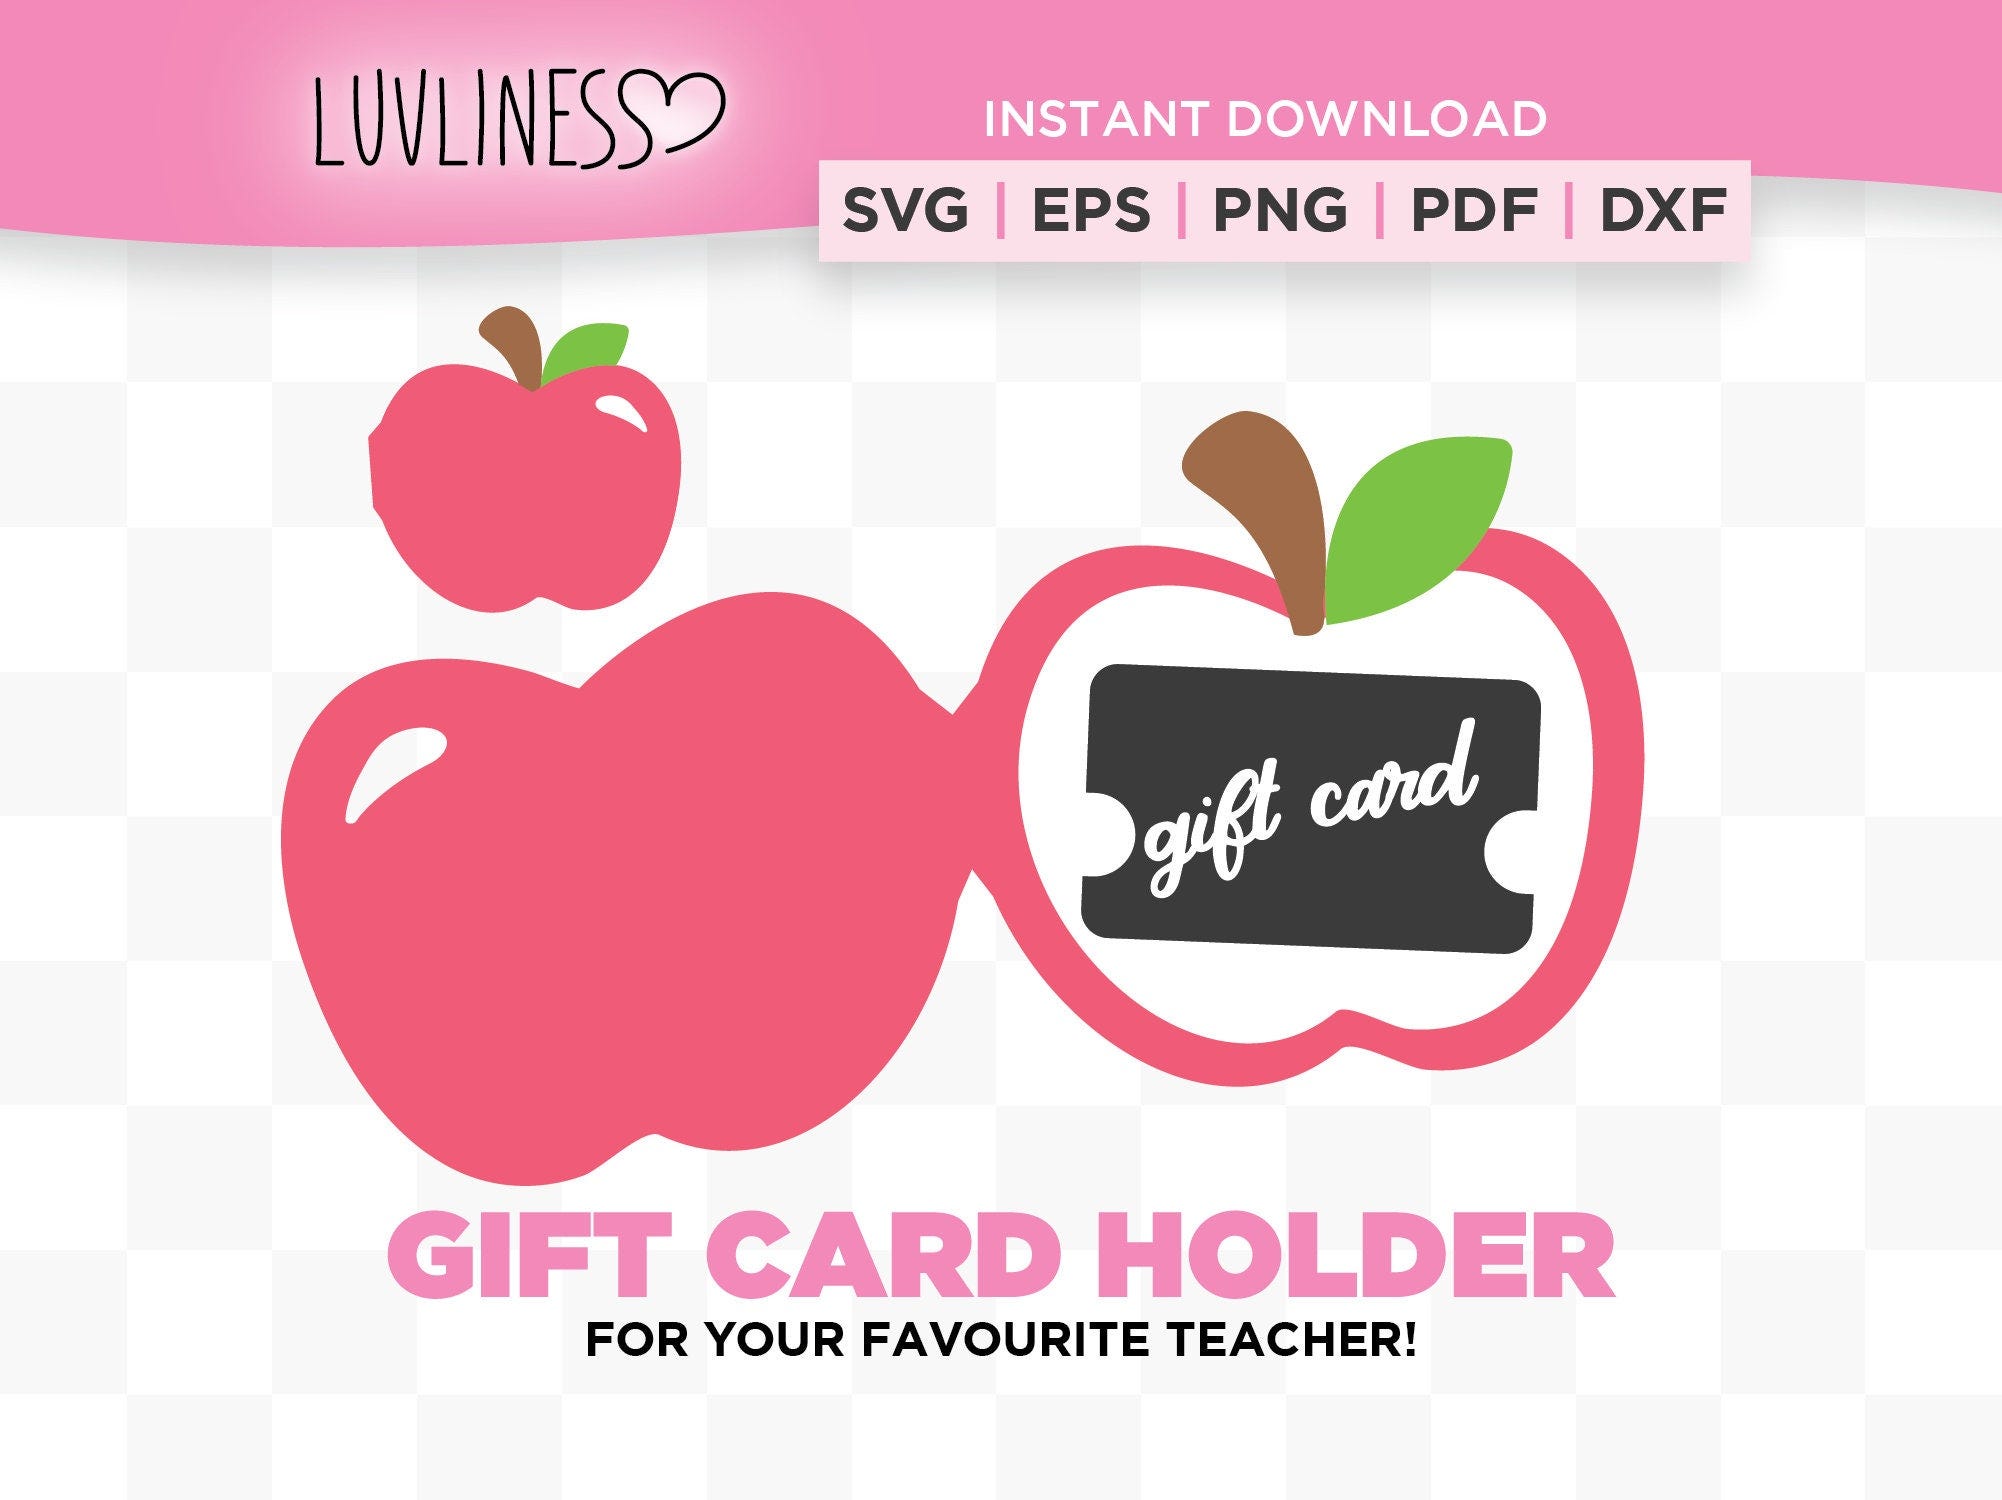 Teacher Gift Card Holder SVG, Teacher Gift Card SVG, Instant Download for Cricut, DIY Teacher Gift Ideas, Teacher Apple svg, Apple Gift Card